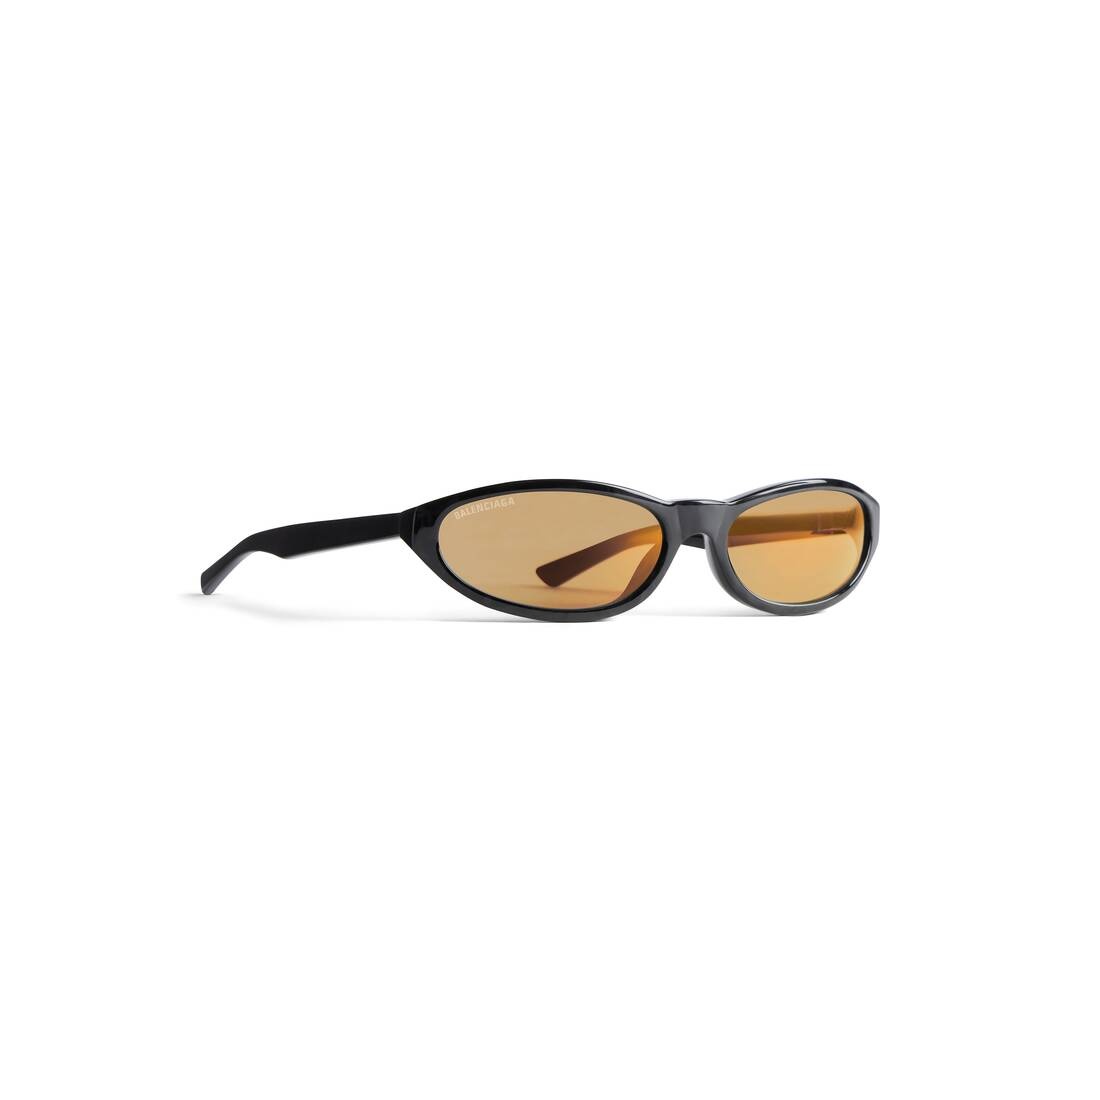 Neo Round Sunglasses in Black - 2